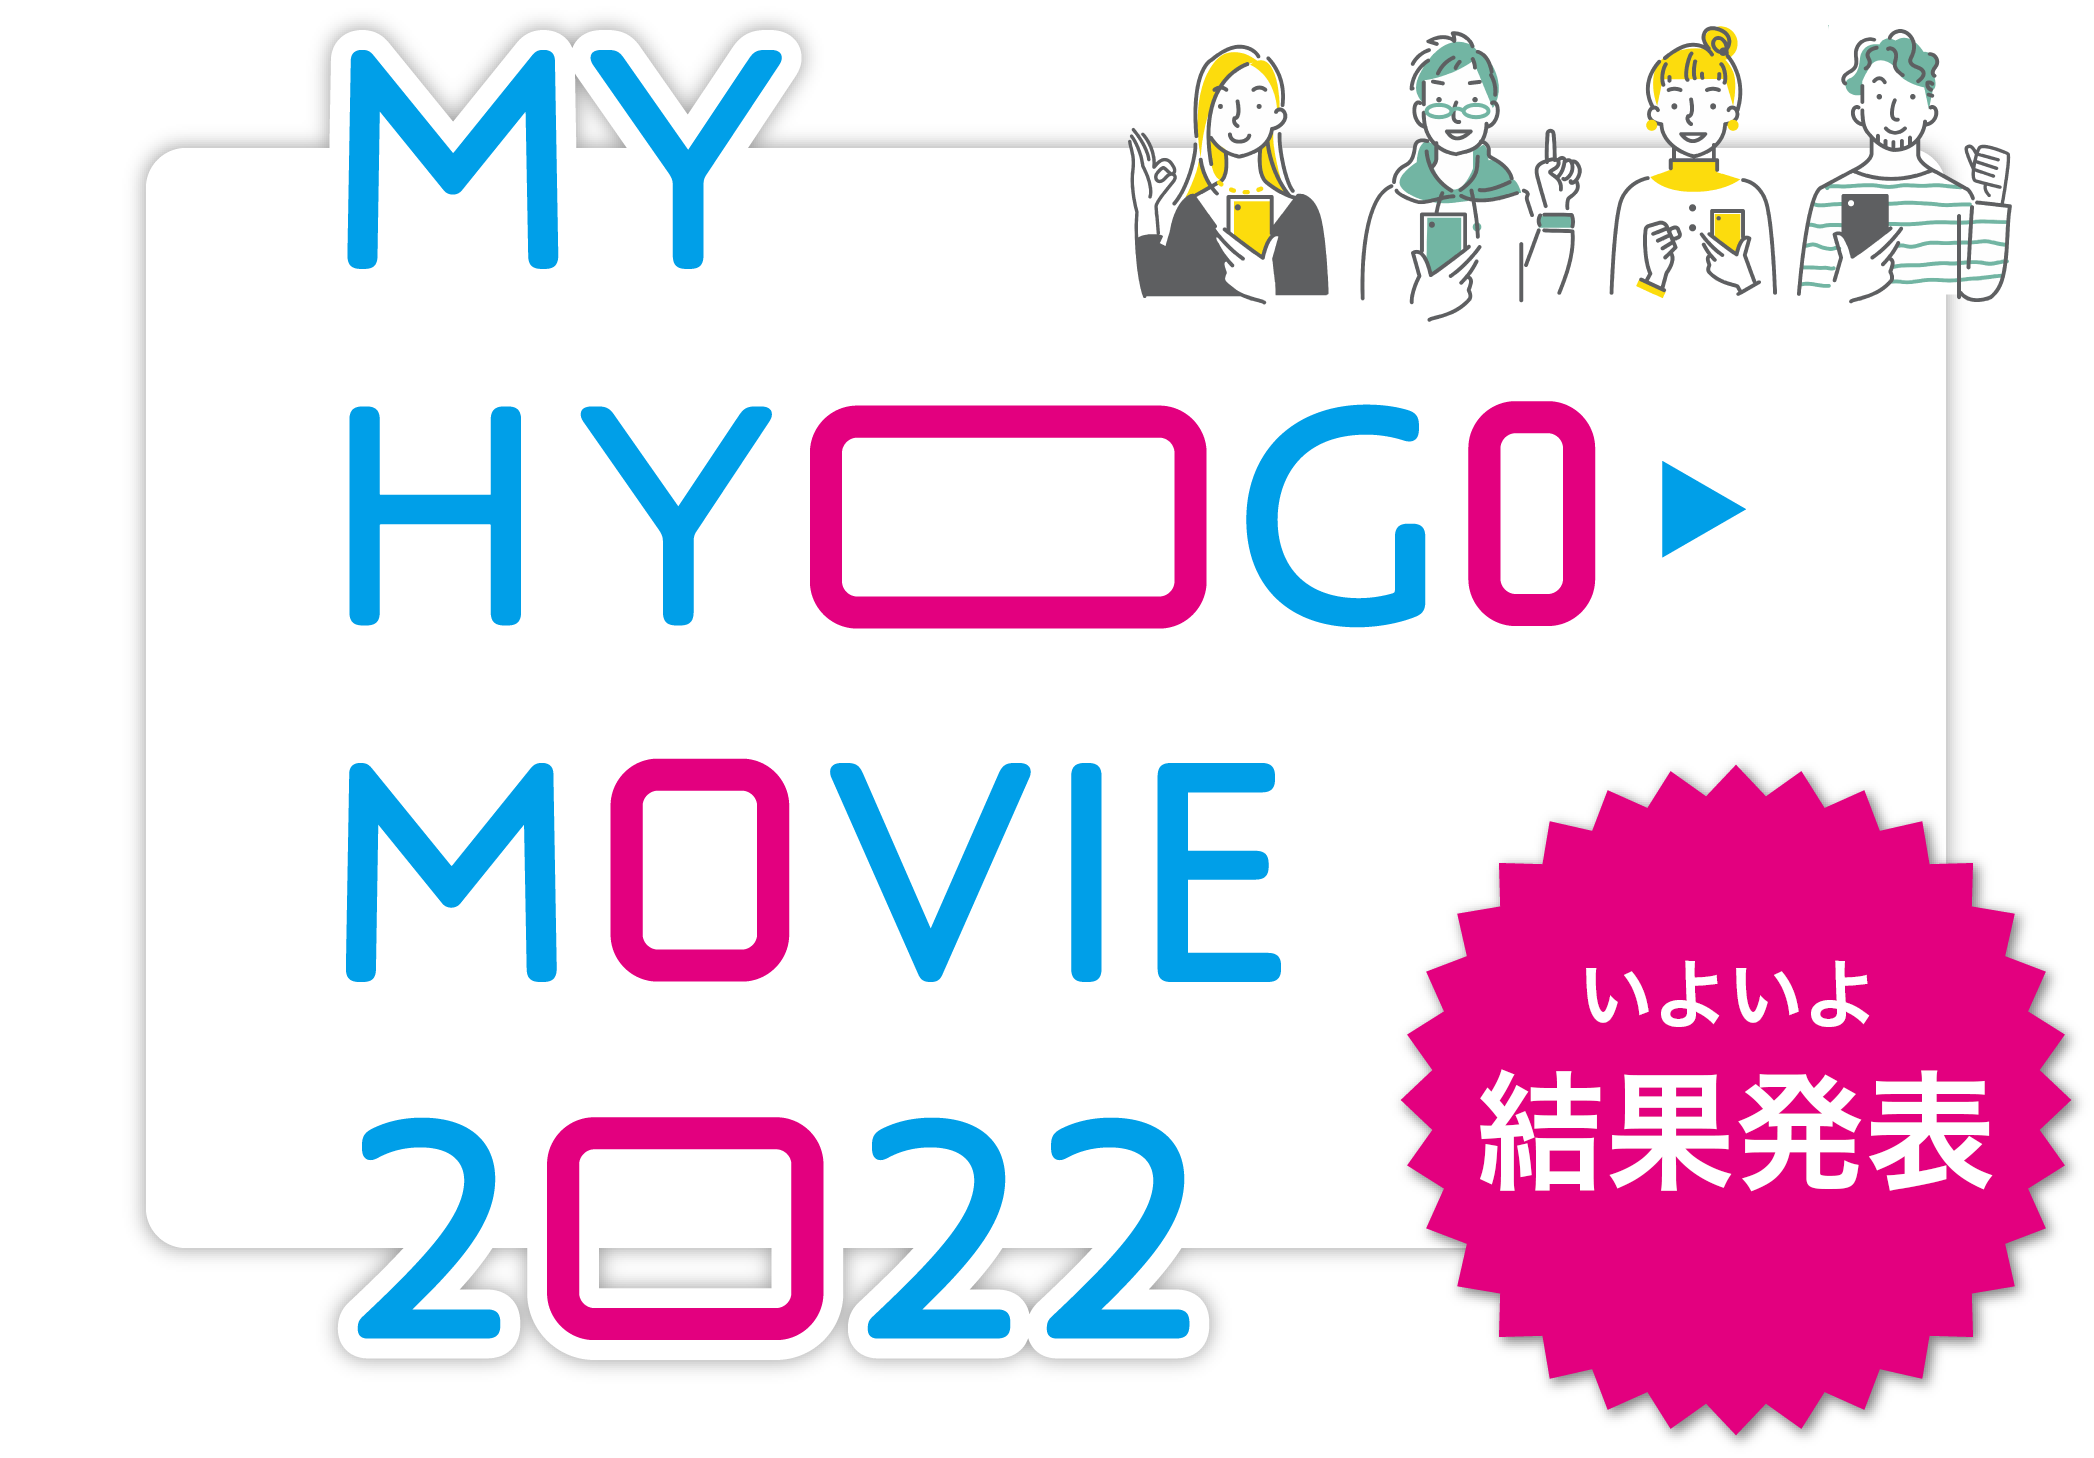 MY HYOGO MOVIE 2022 オーディエンス投票期間2022年12月14日まで